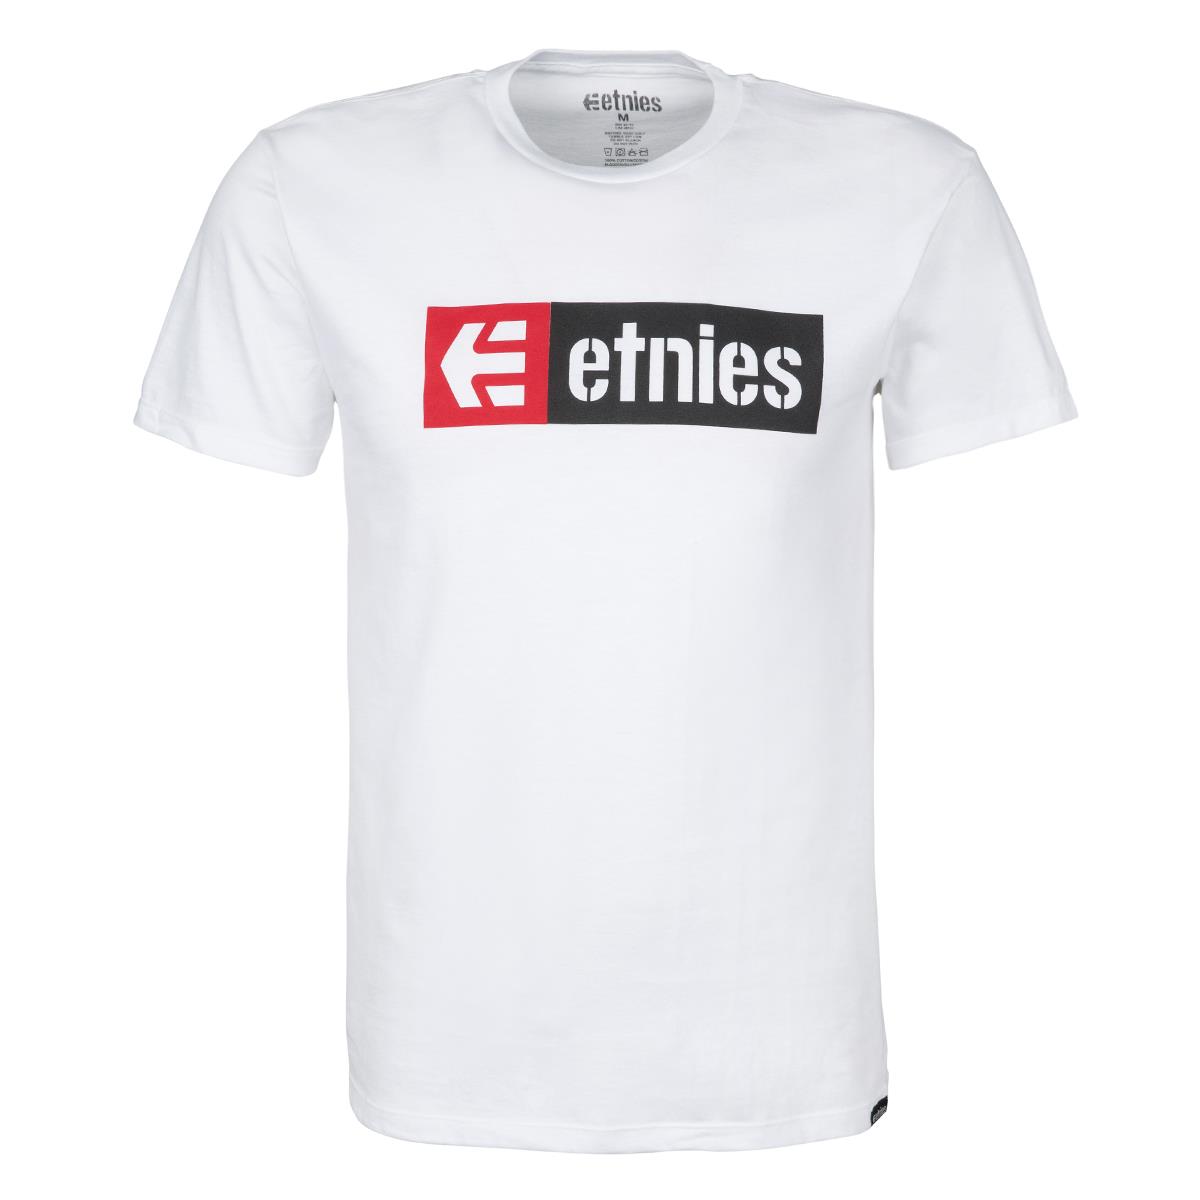 Etnies T-Shirt New Box Weiß/Pink